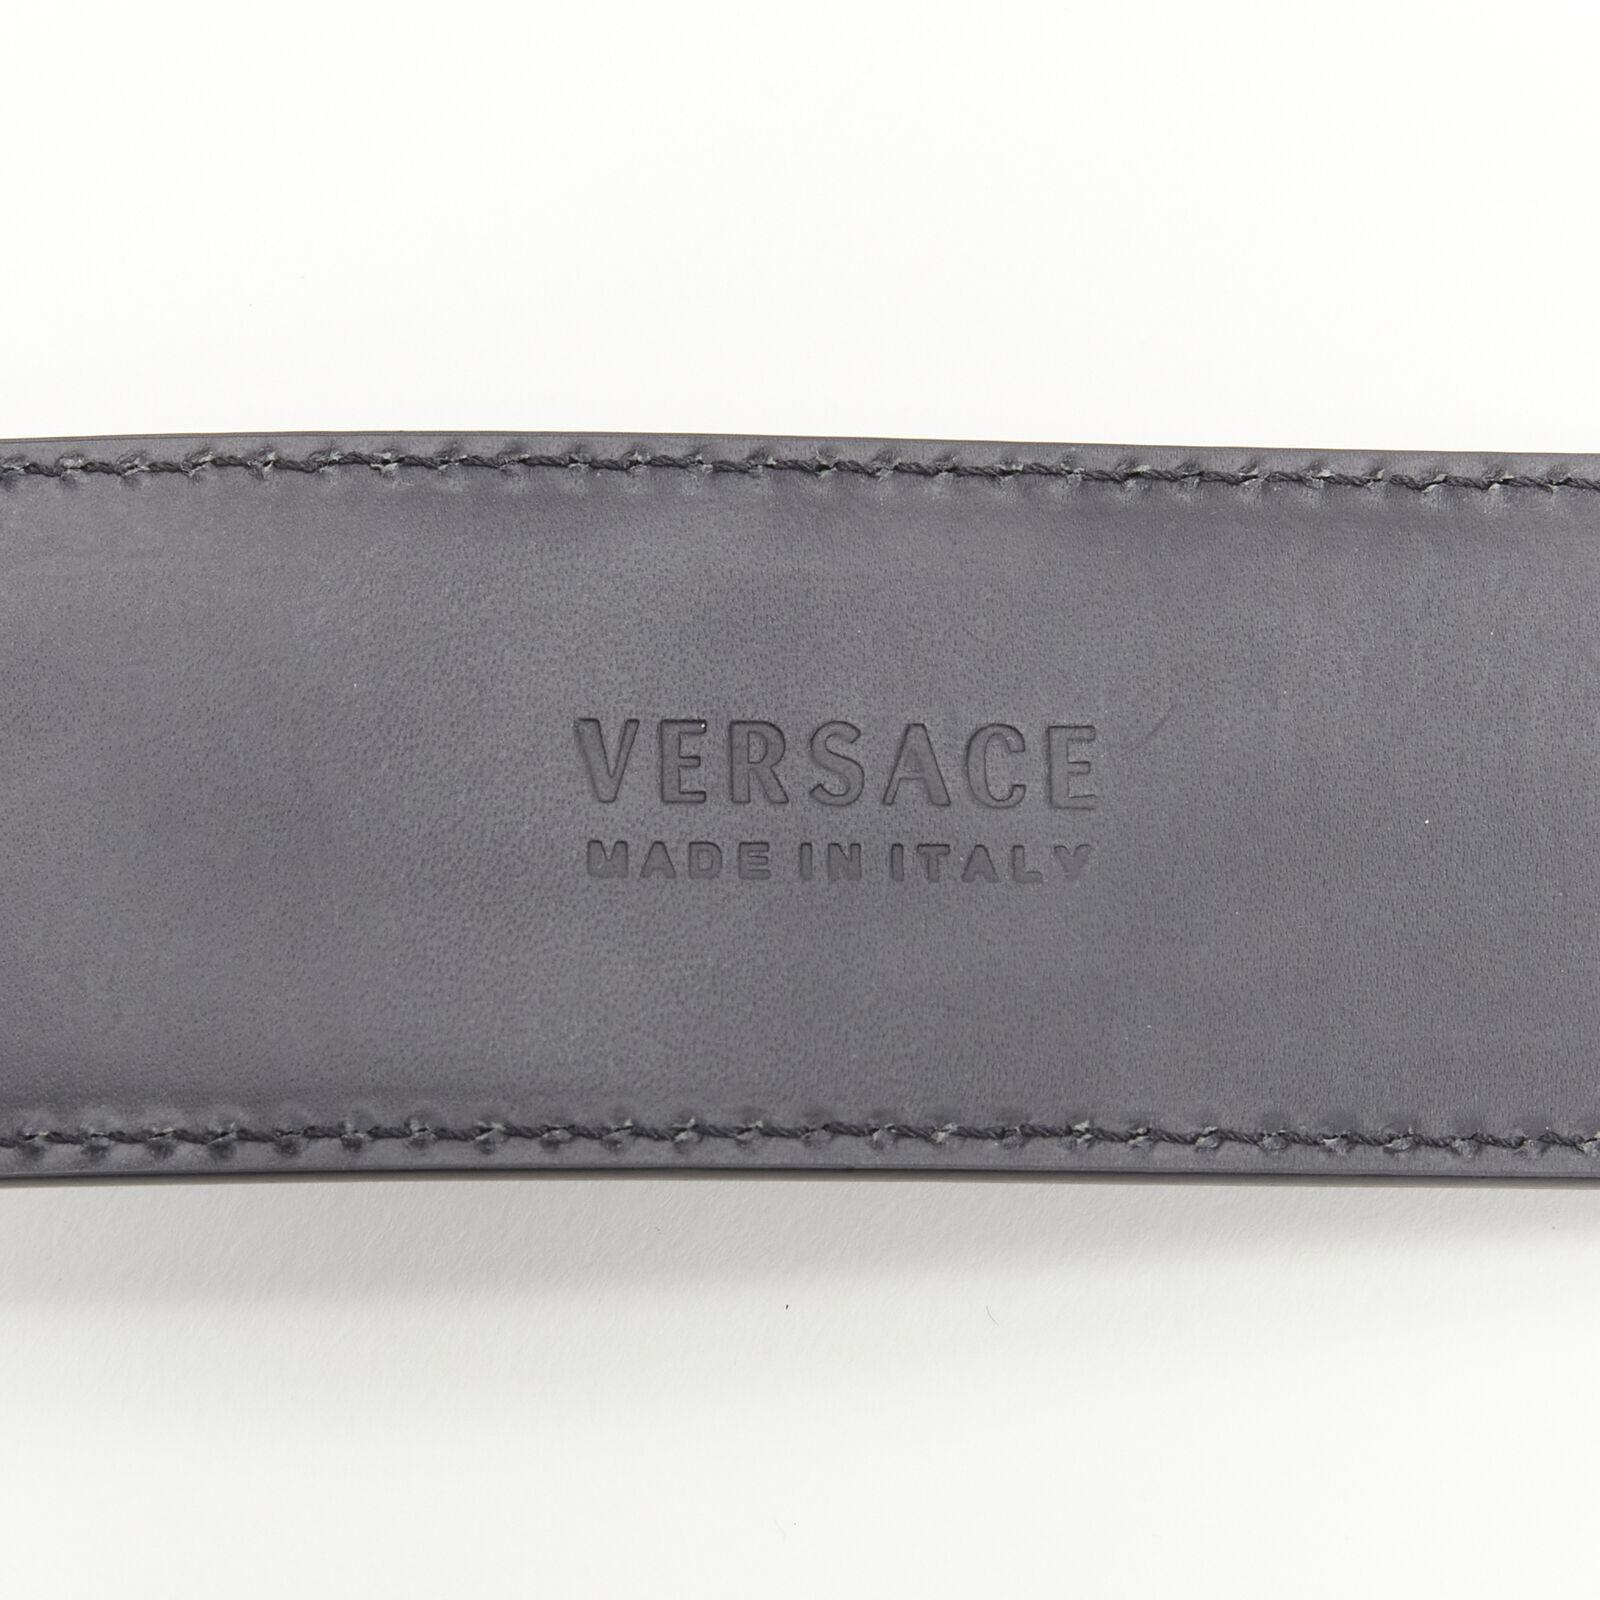 VERSACE Runway Medusa gold chain silver buckle leather belt 100cm 38-42